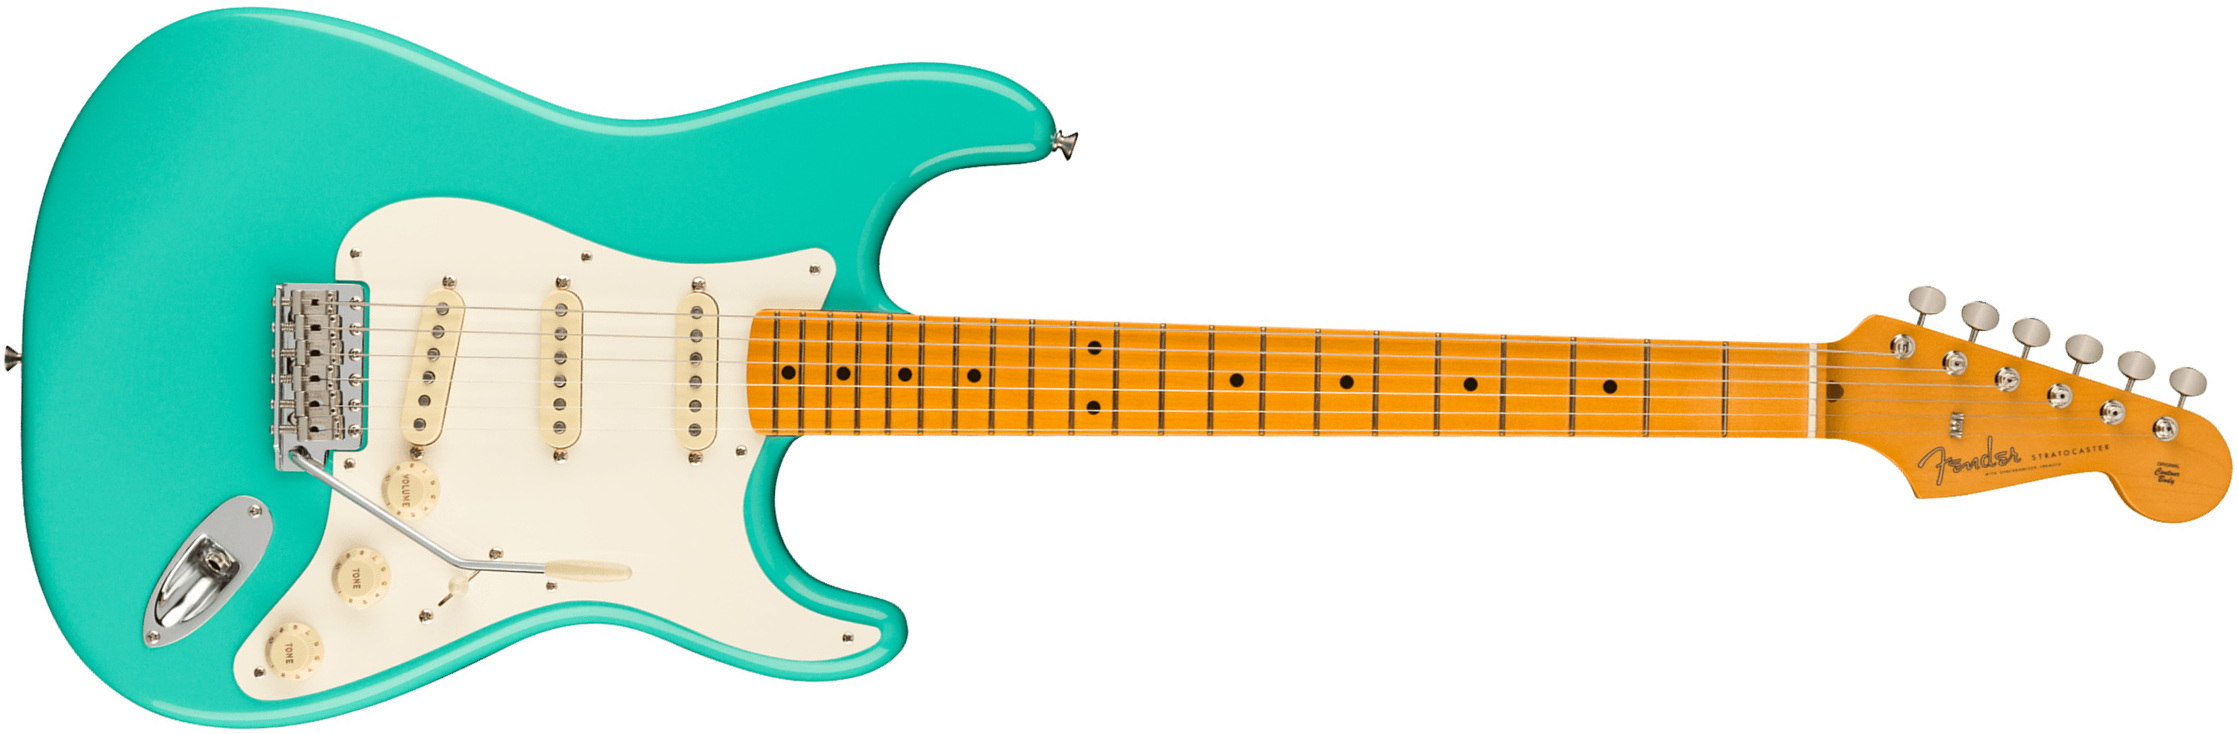 Fender Strat 1957 American Vintage Ii Usa 3s Trem Mn - Sea Foam Green - Guitarra eléctrica con forma de str. - Main picture